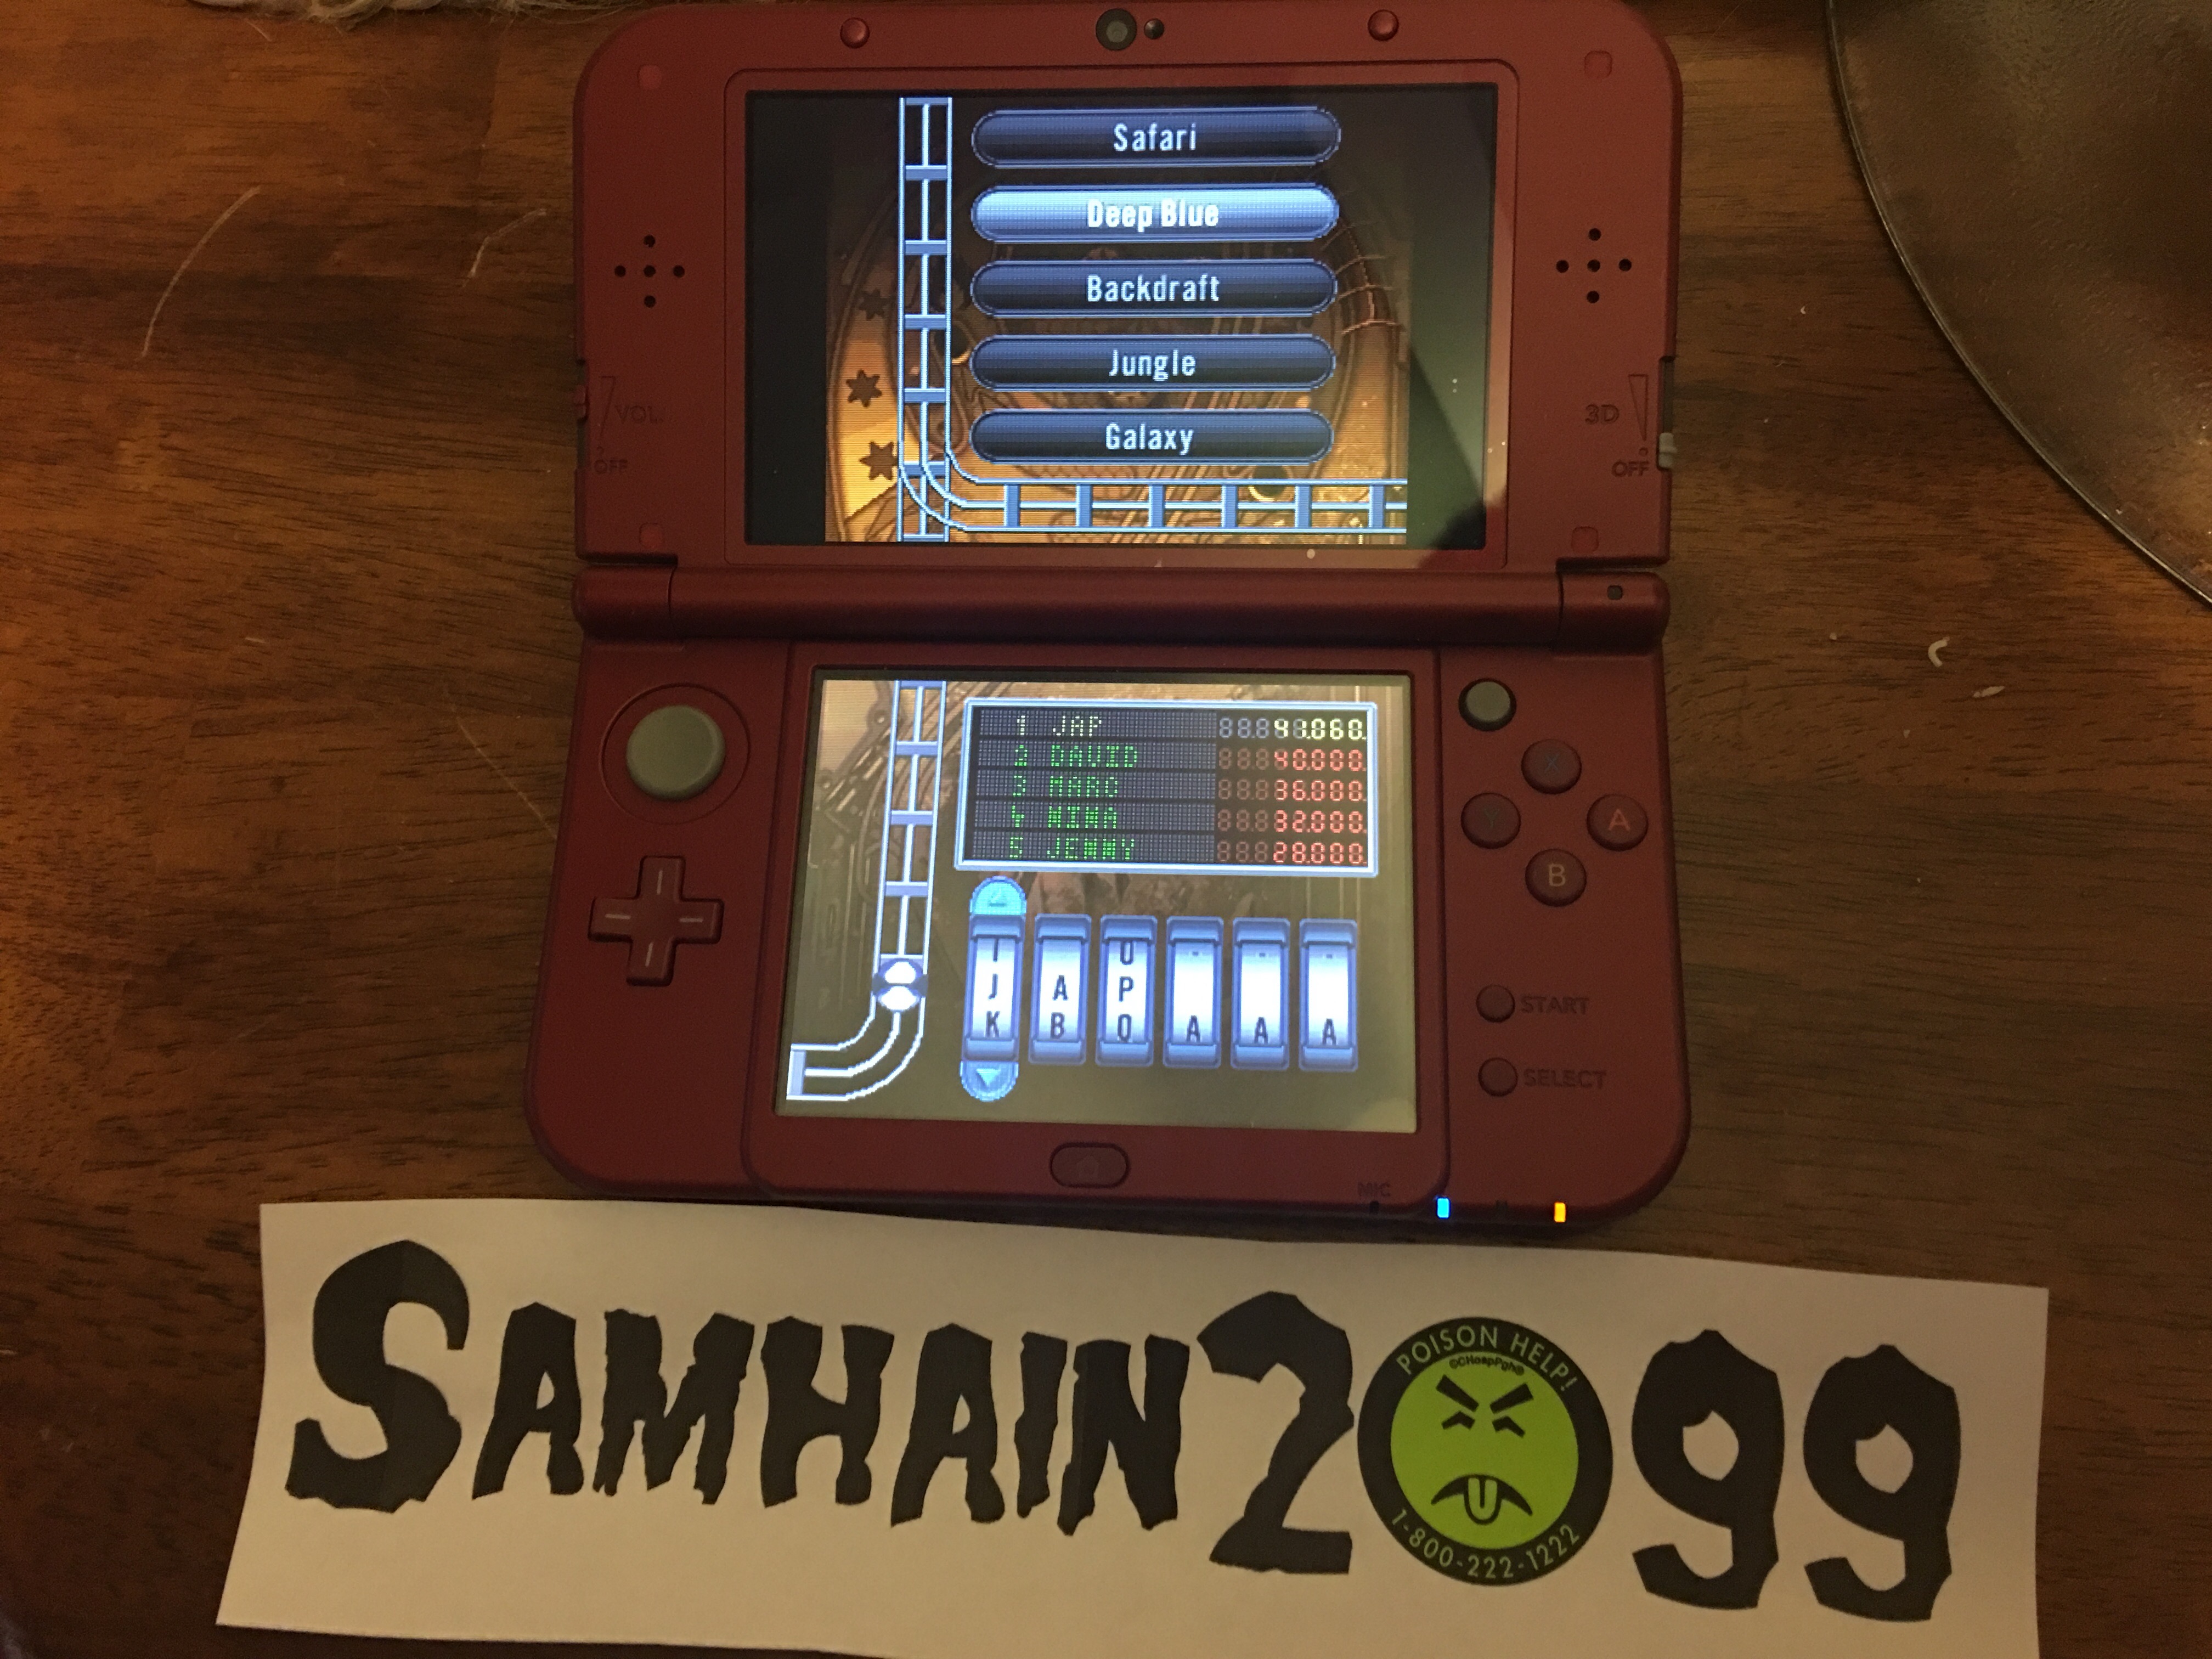 Samhain2099: Crazy Pinball: Deep Blue (Nintendo DS) 41,060 points on 2017-02-26 16:07:36